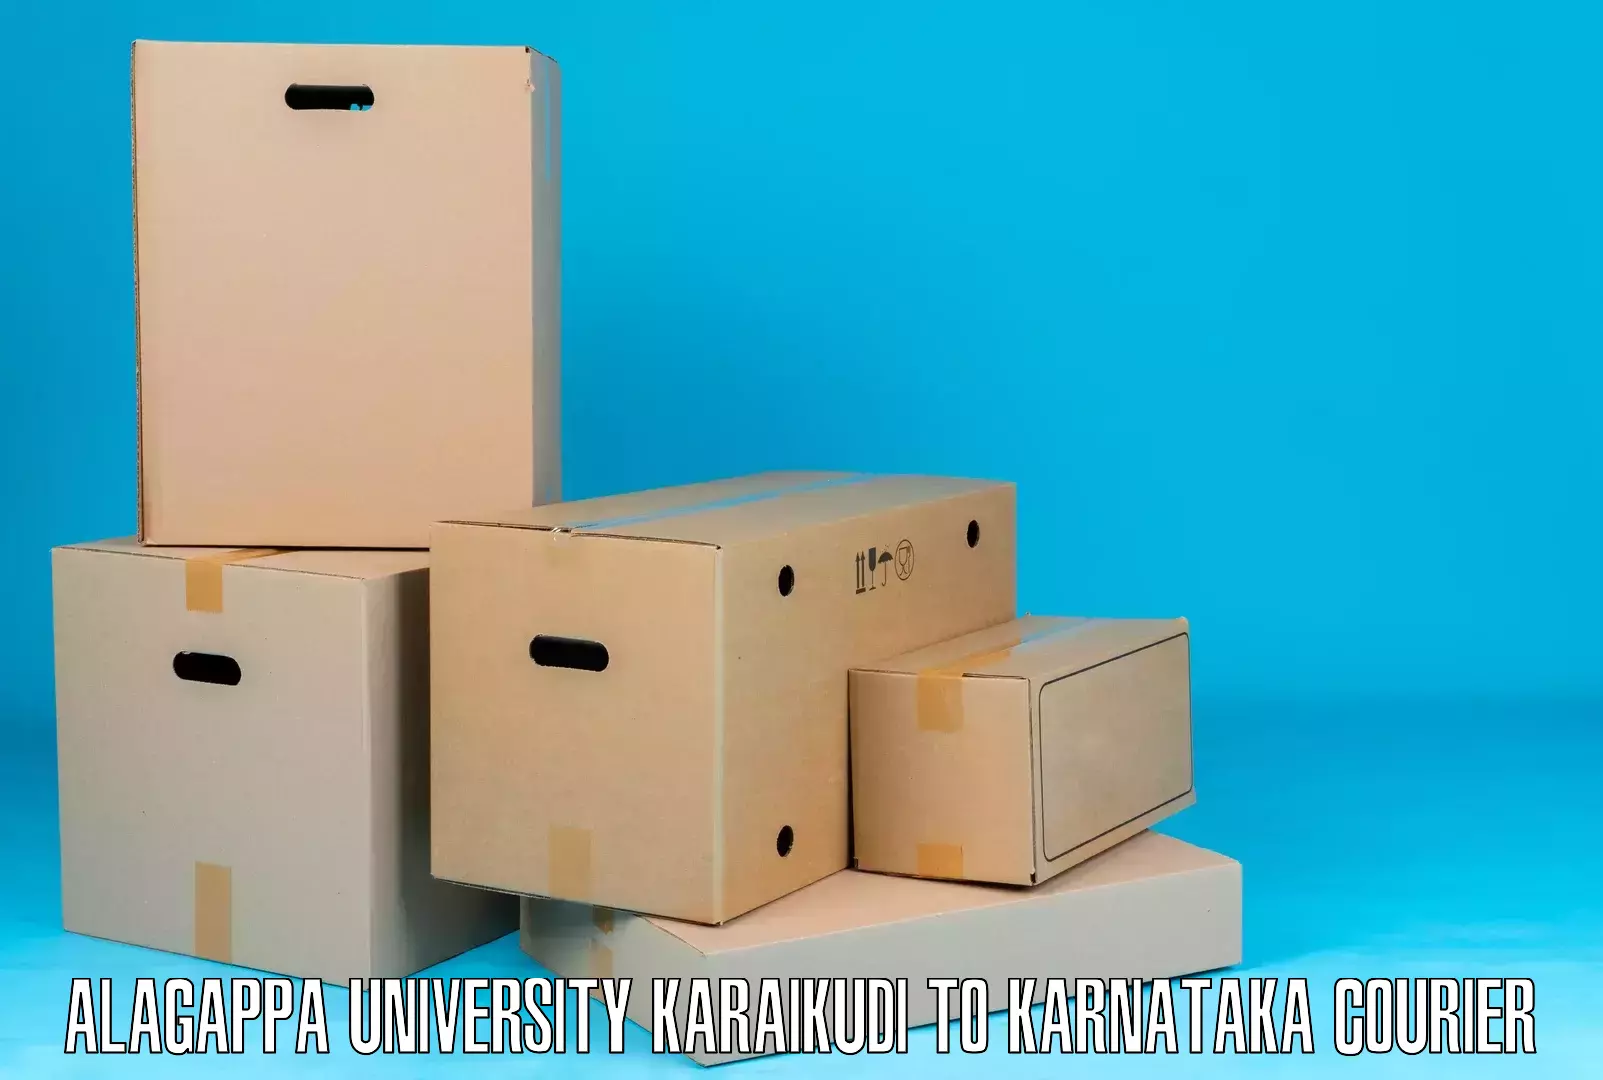 Package delivery network Alagappa University Karaikudi to Karnataka